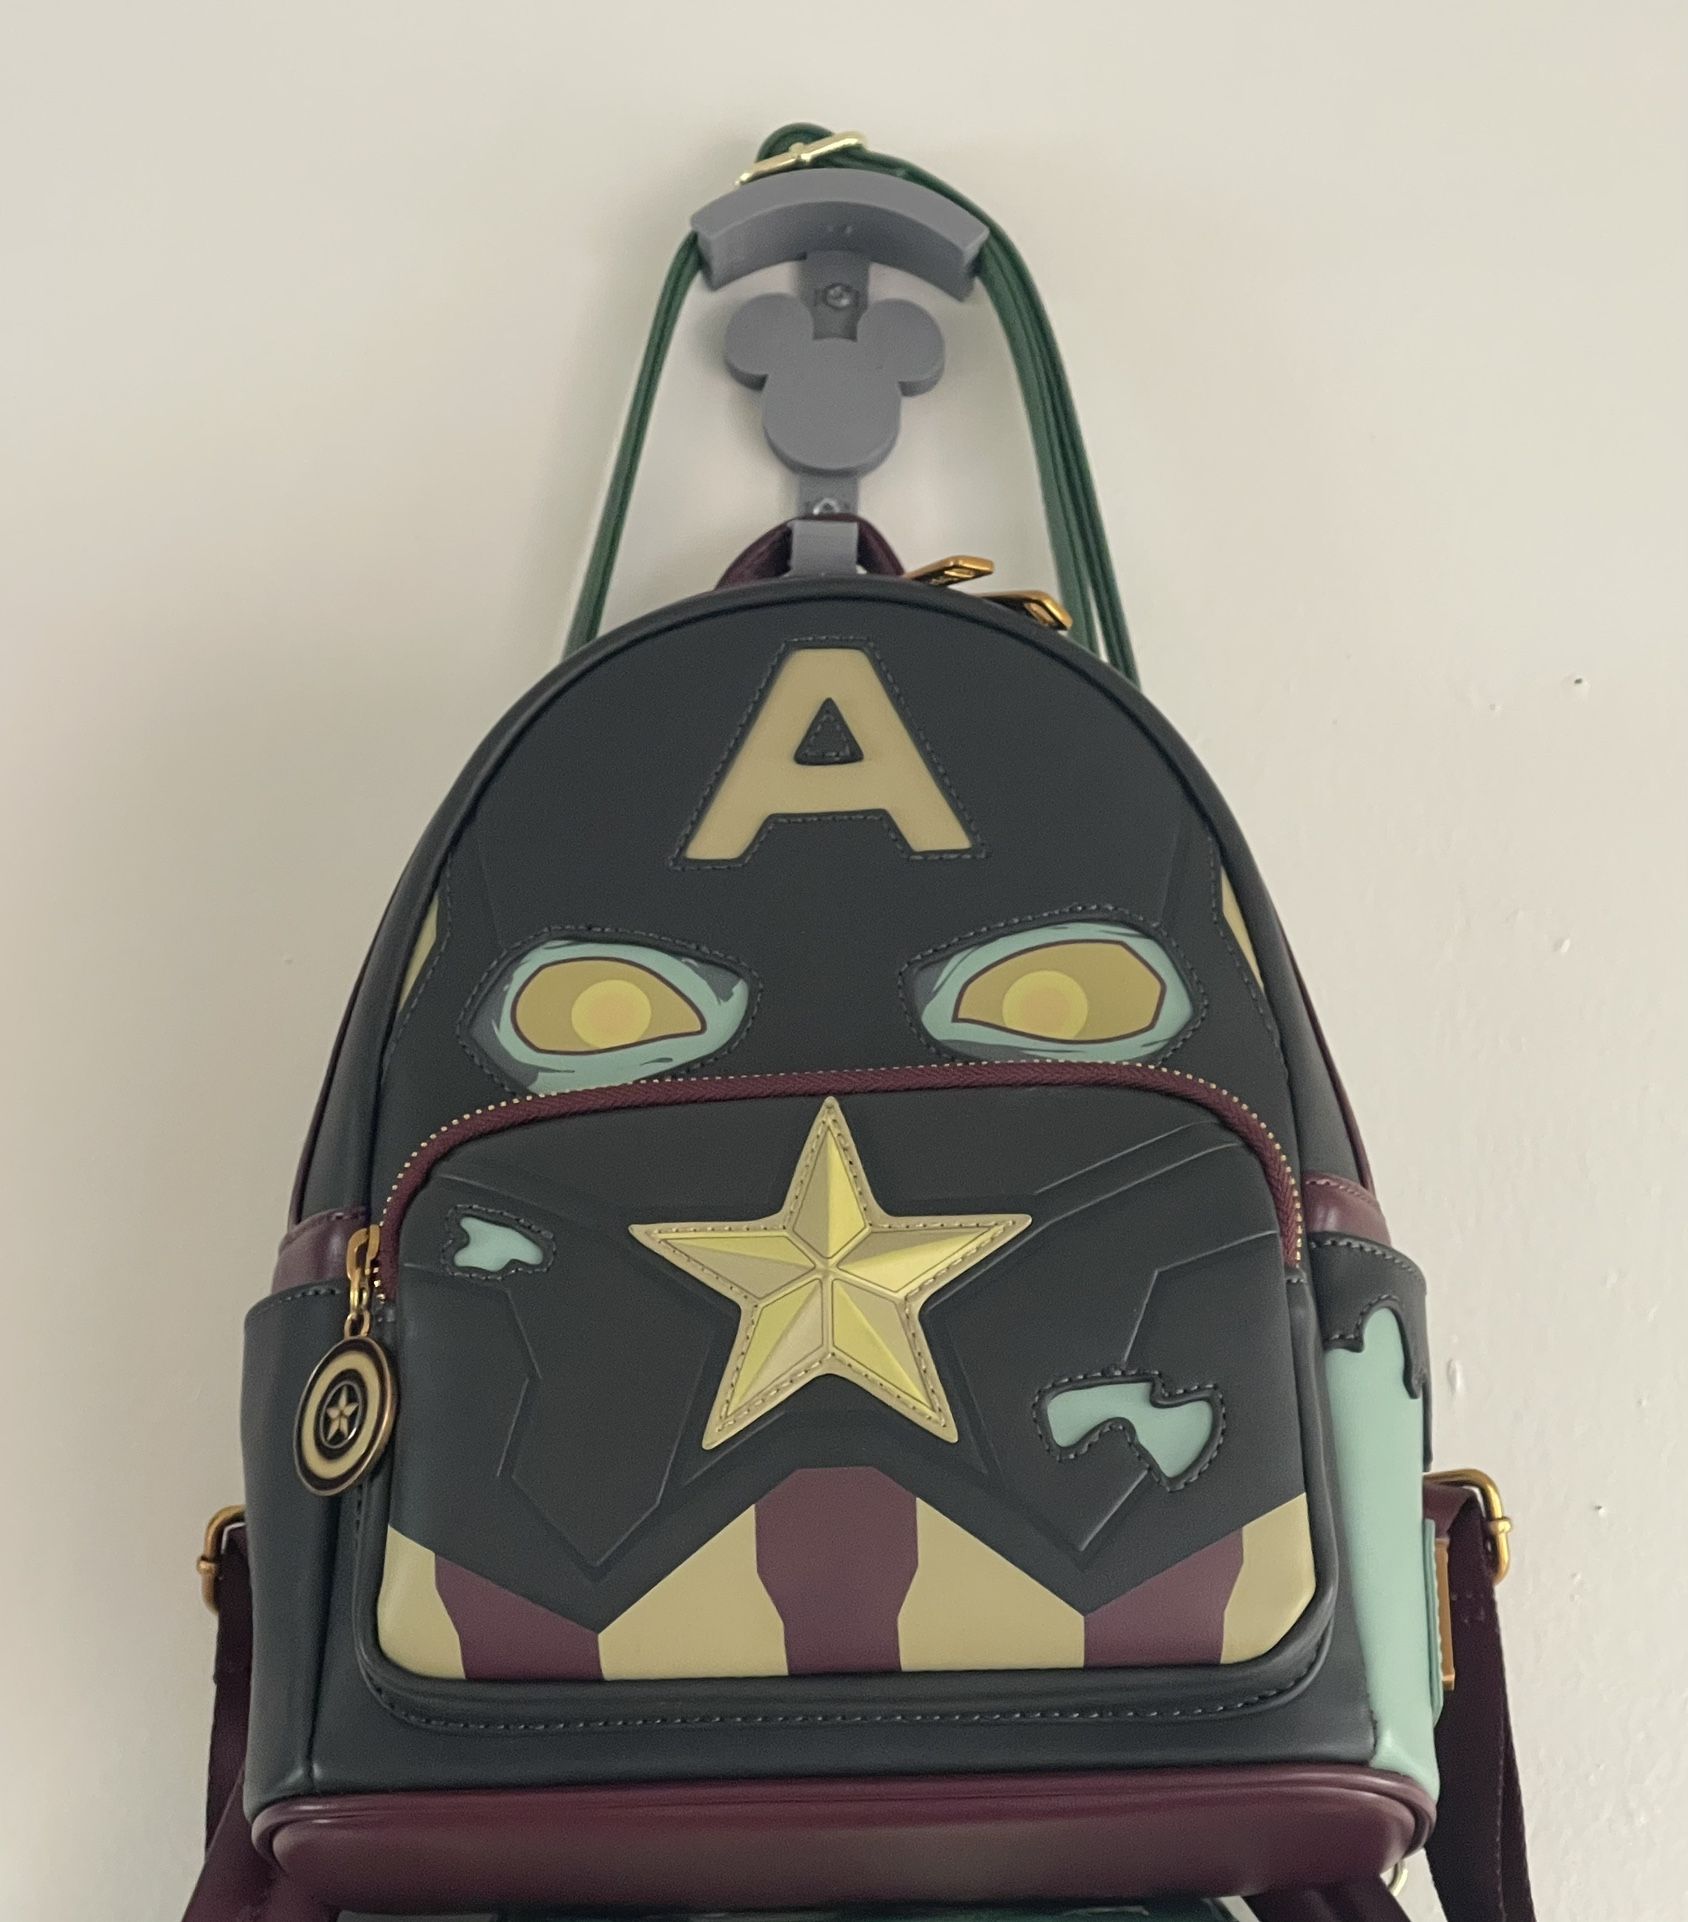 Michael Kors Backpack for Sale in Gardena, CA - OfferUp